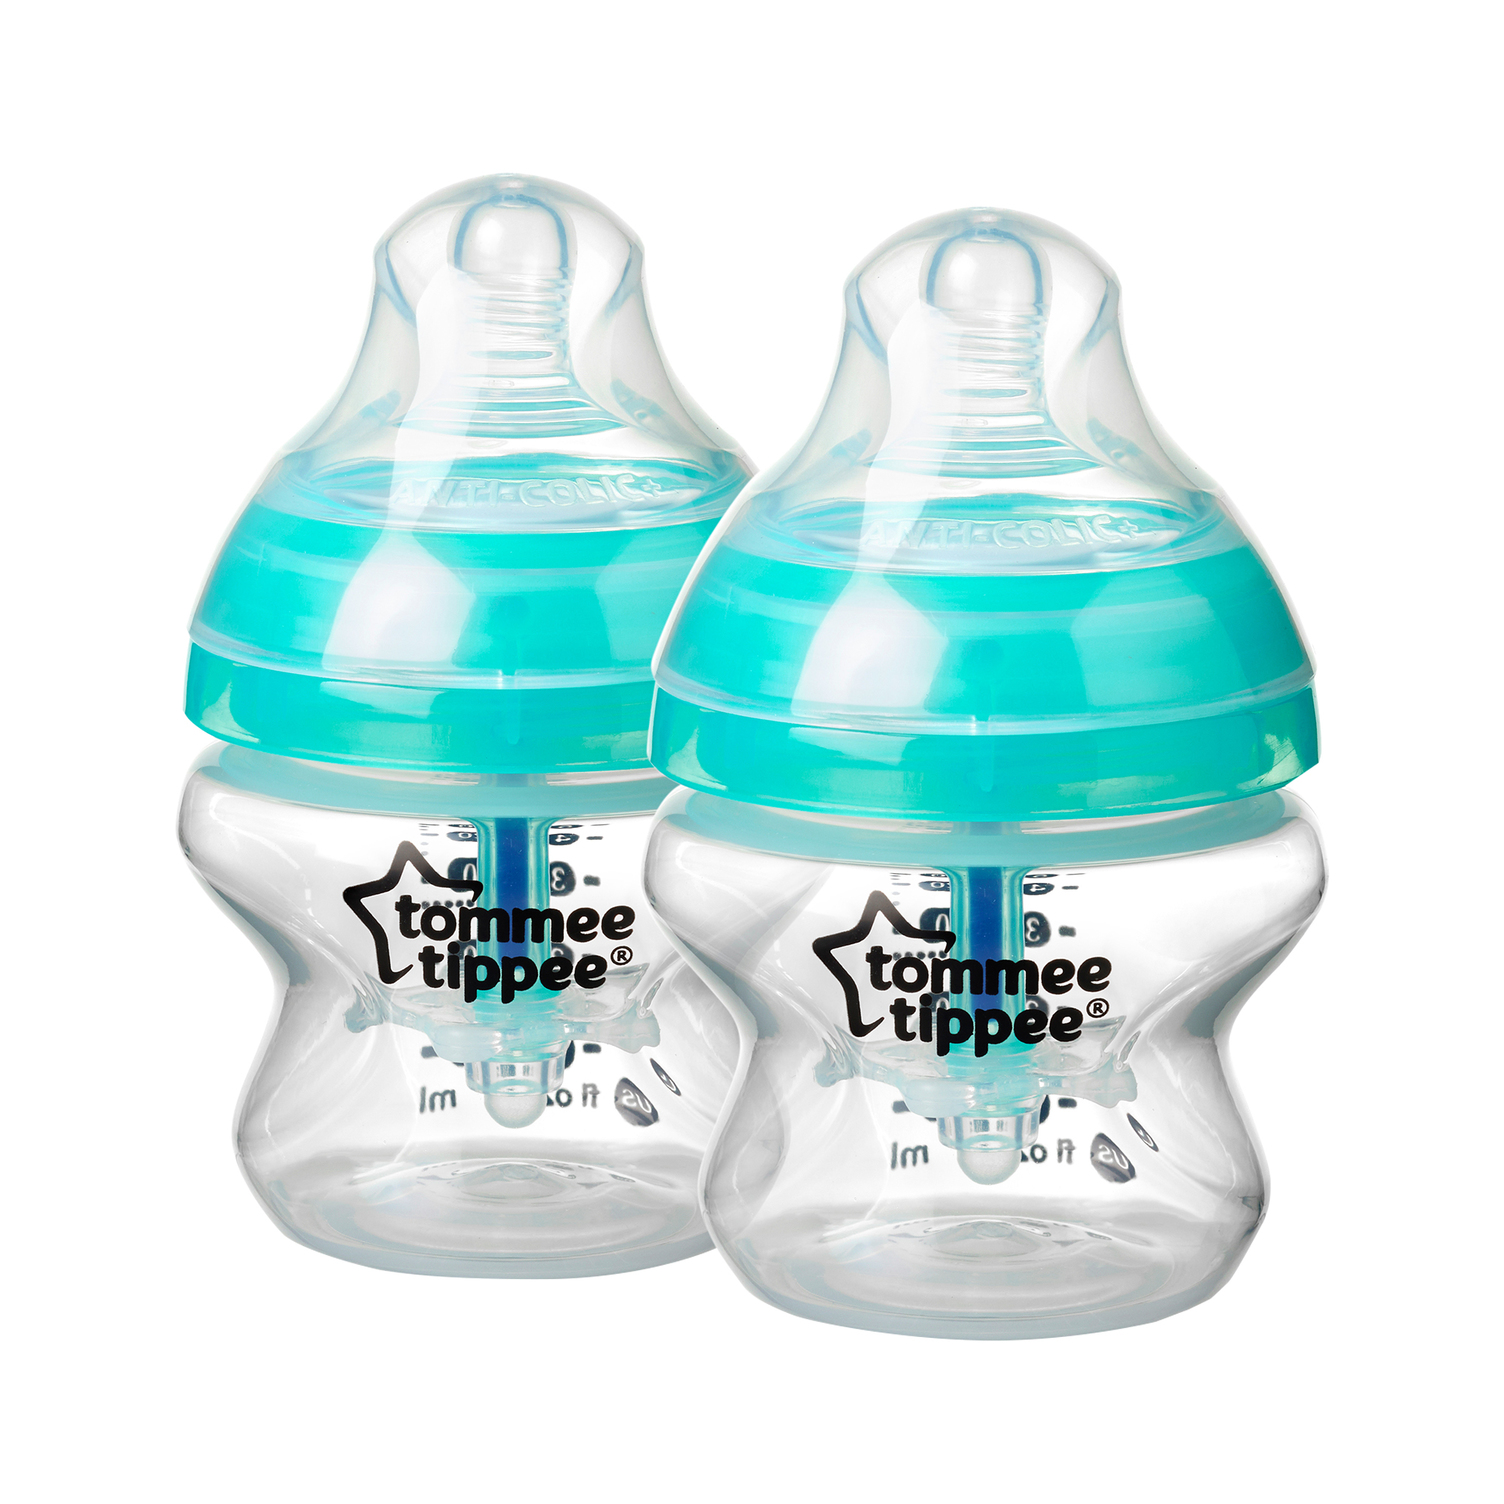 Tommee Tippee Advanced Anti Colic Newborn Baby Bottle Feeding Gift Set - image 3 of 13